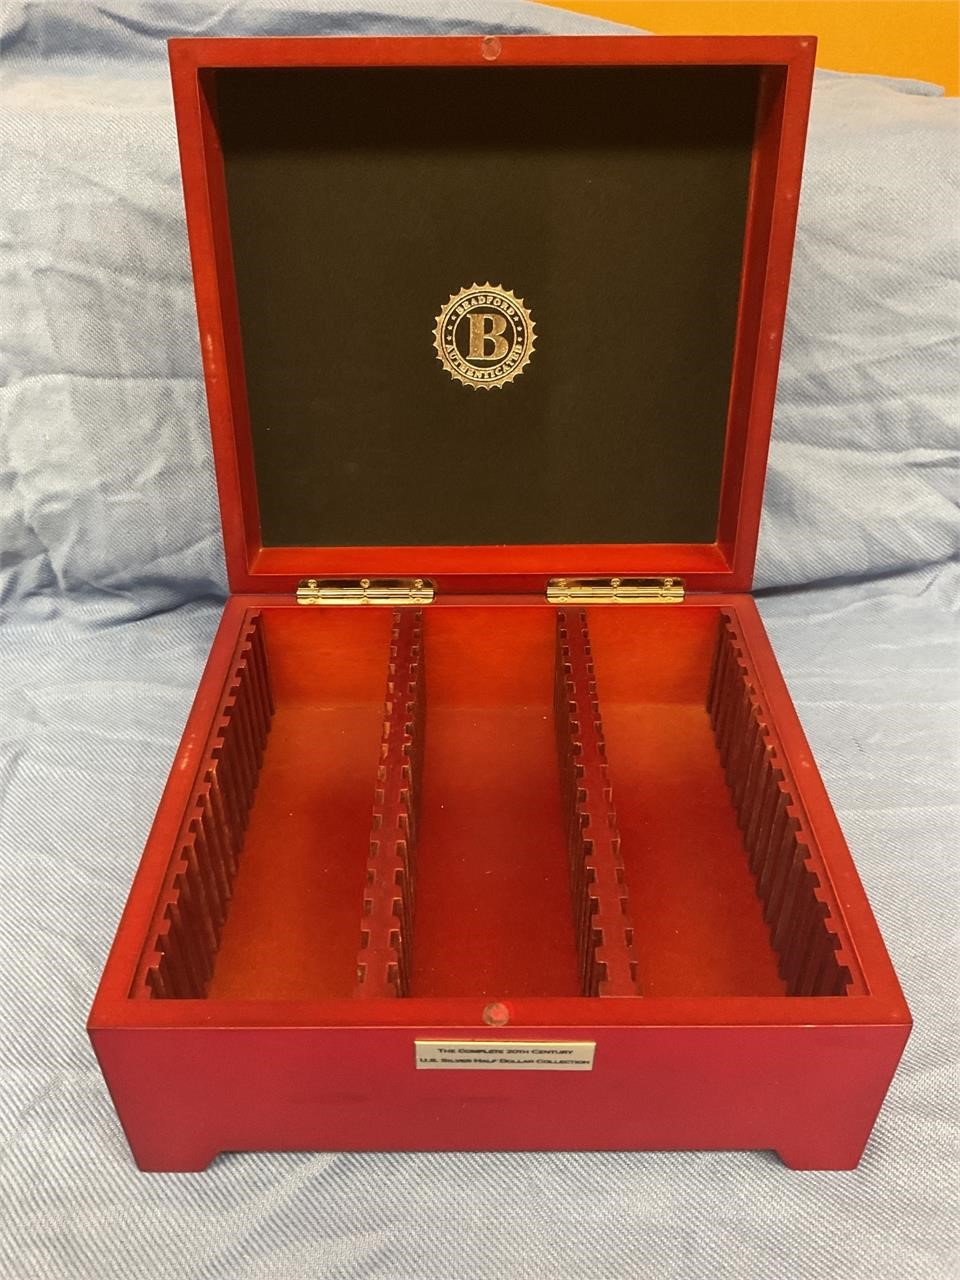 Bradford Coin display box